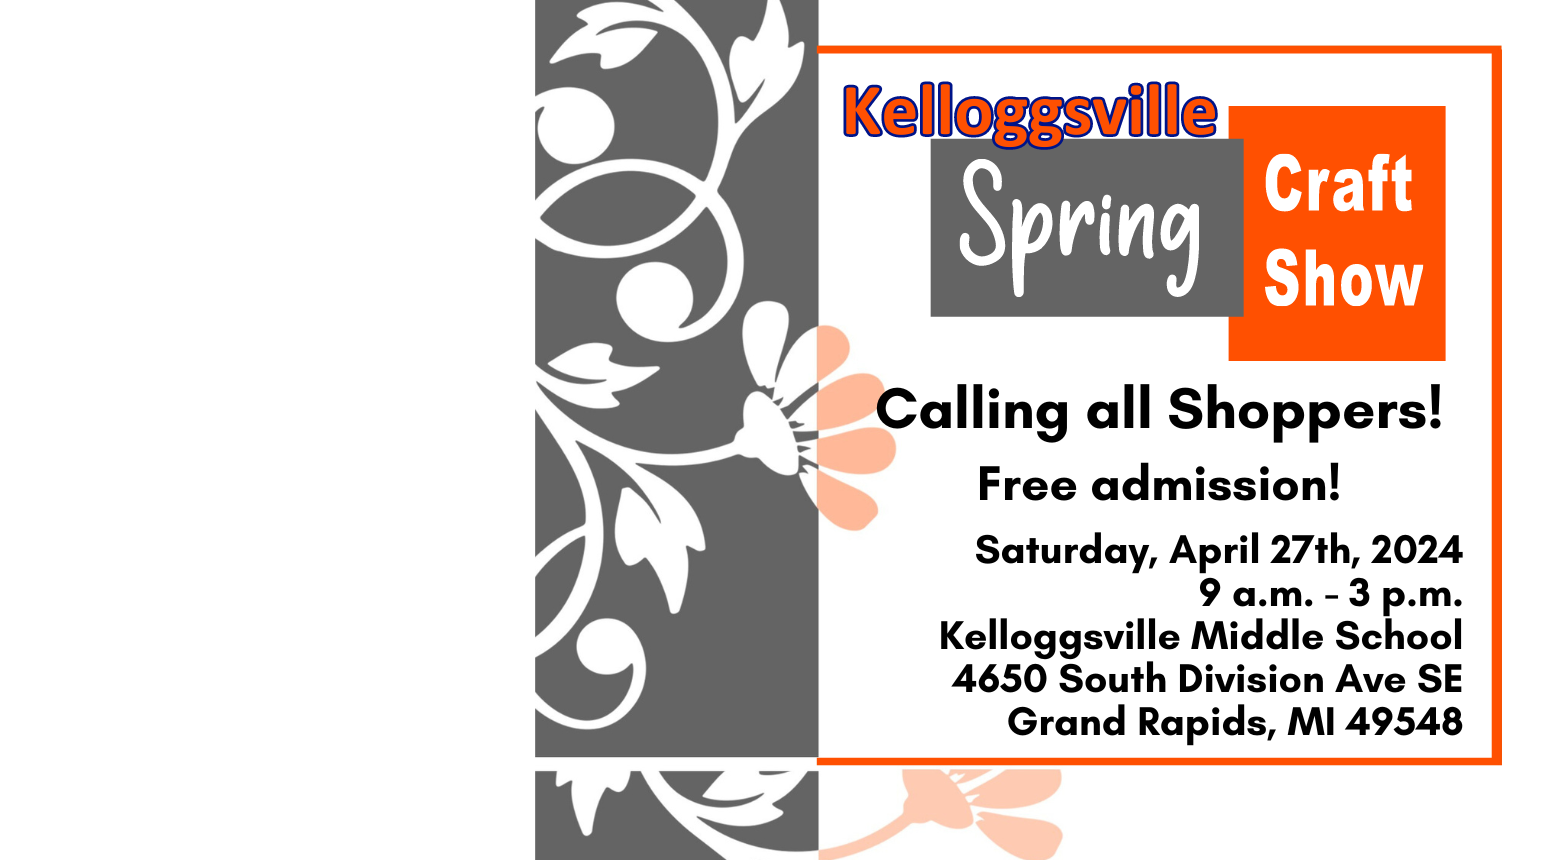 Kelloggsville Craft Show April 27th, 2024 9 a.m. - 3 p.m.